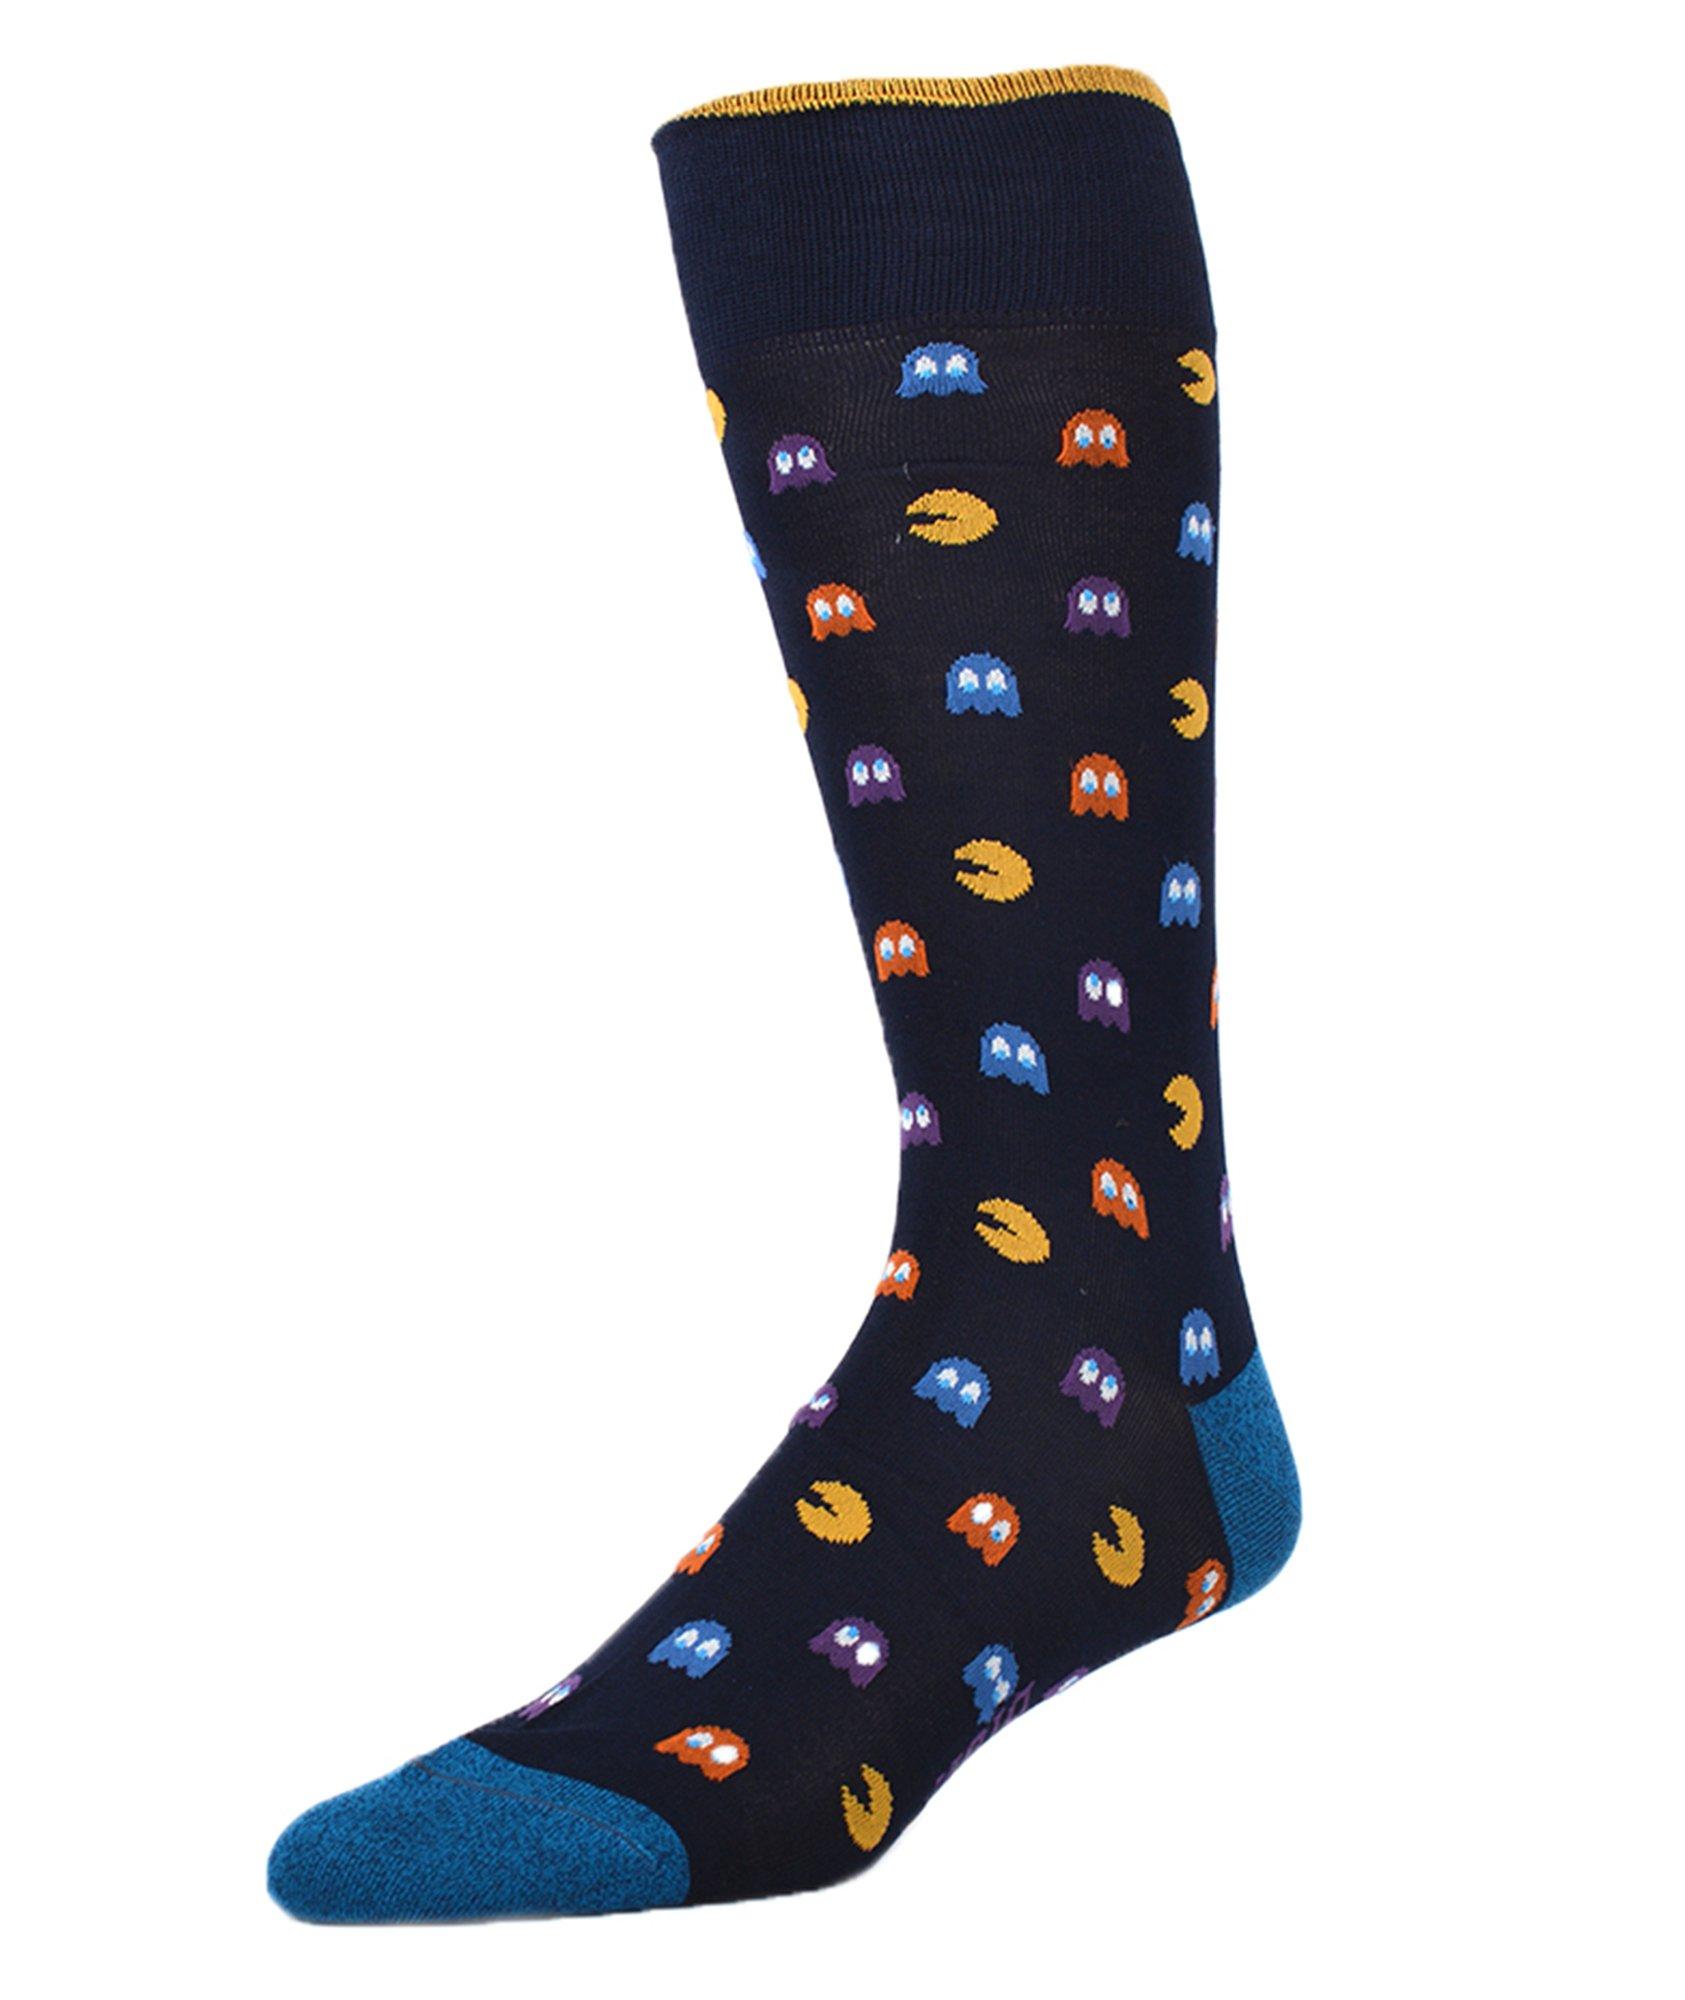 Pac-Man Cotton-Blend Socks image 0